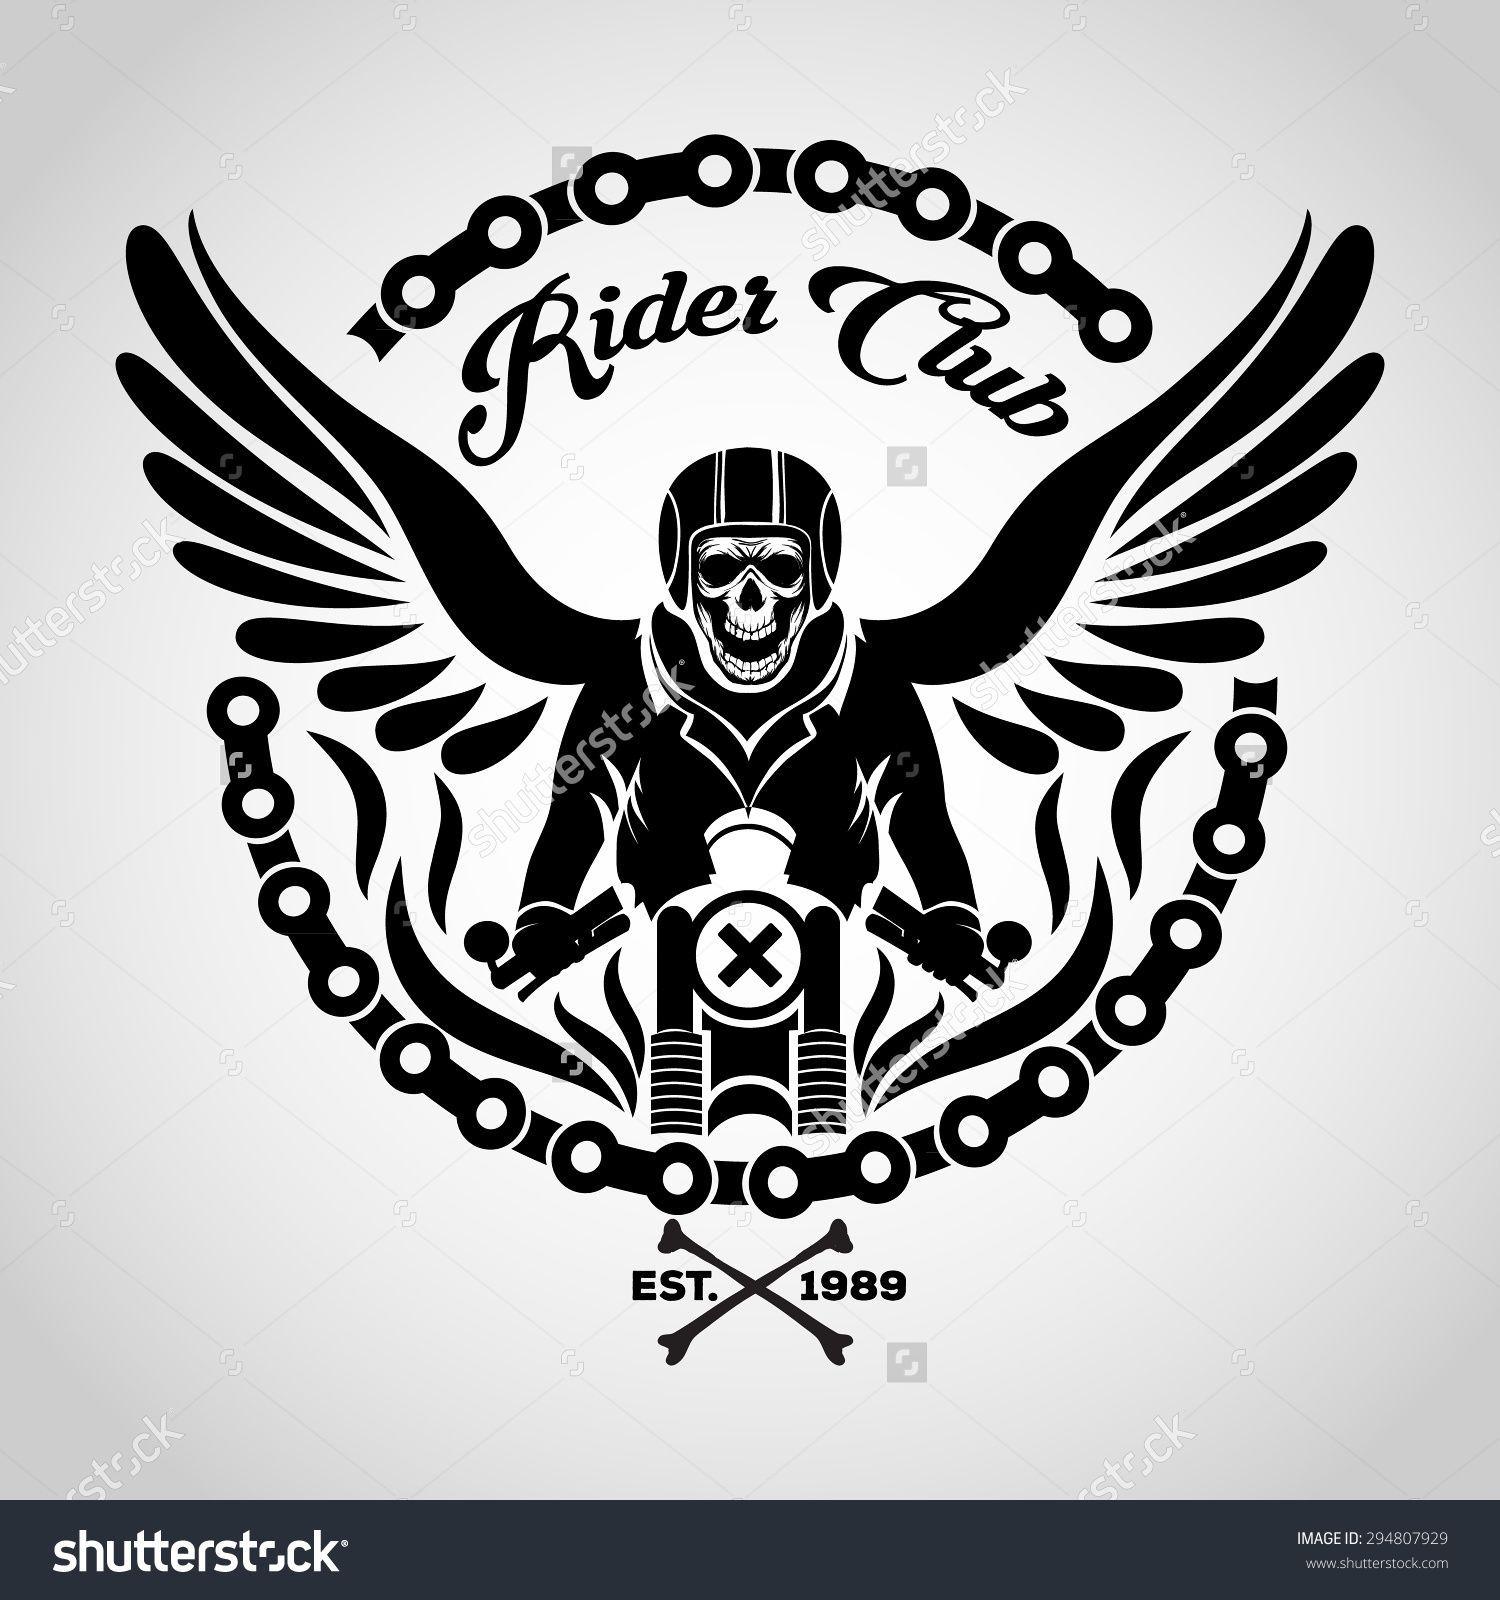 Motorcycle Skull Logo - Image result for motorcycle skull logo | CITRA | Logos, Skull logo ...